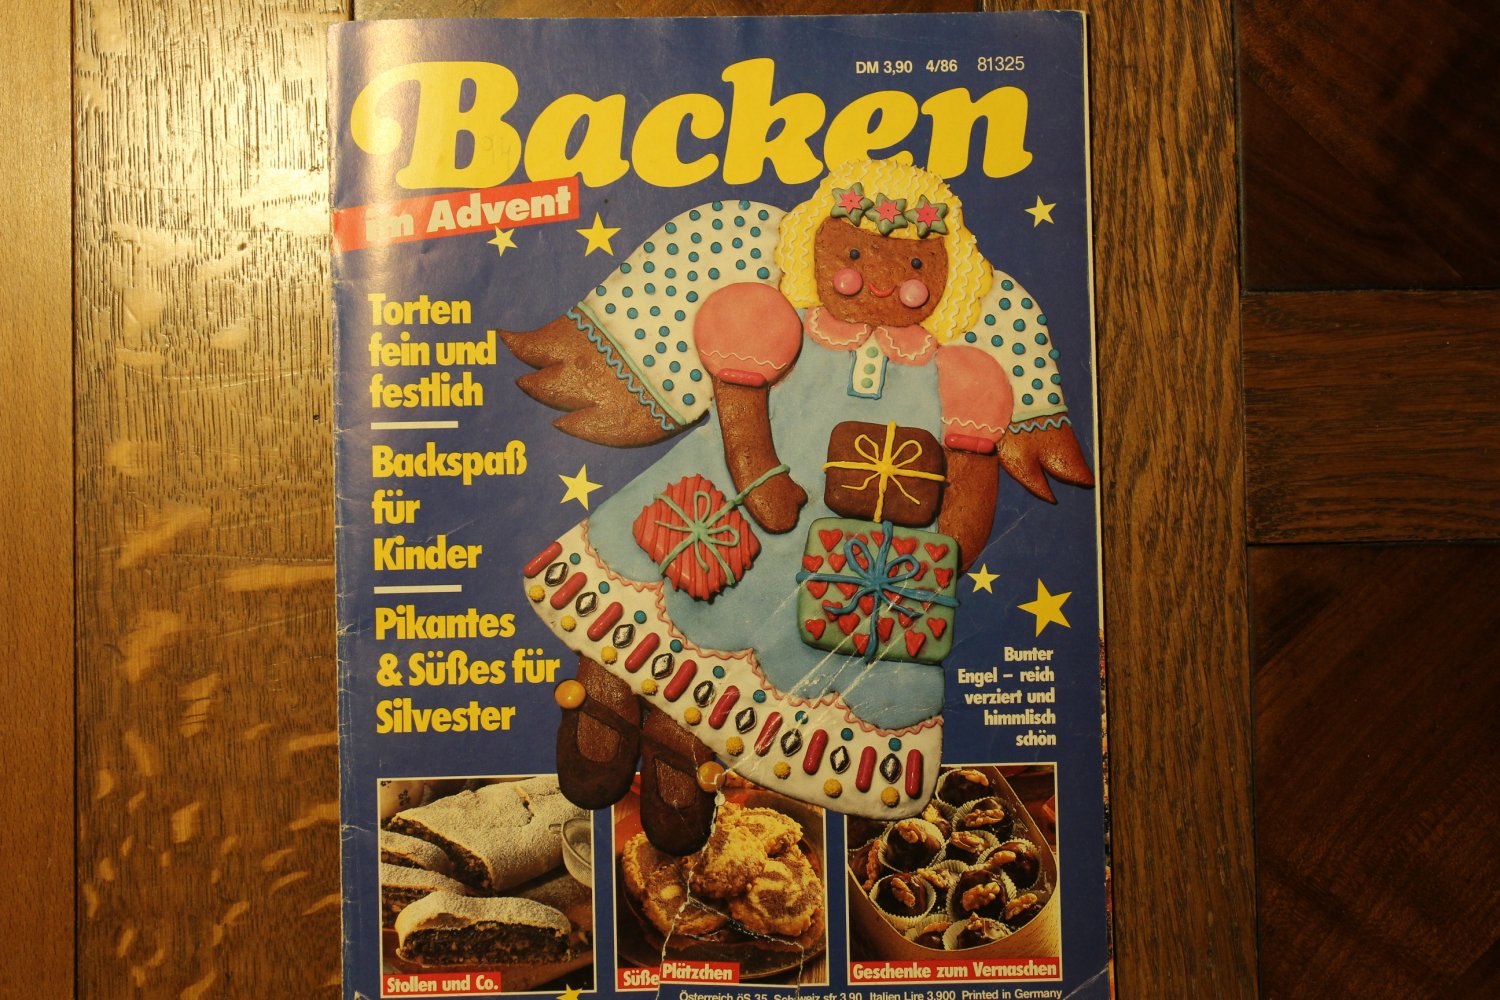 Backen im Advent (Back-Magazin, 1986) / Burda Rezepte